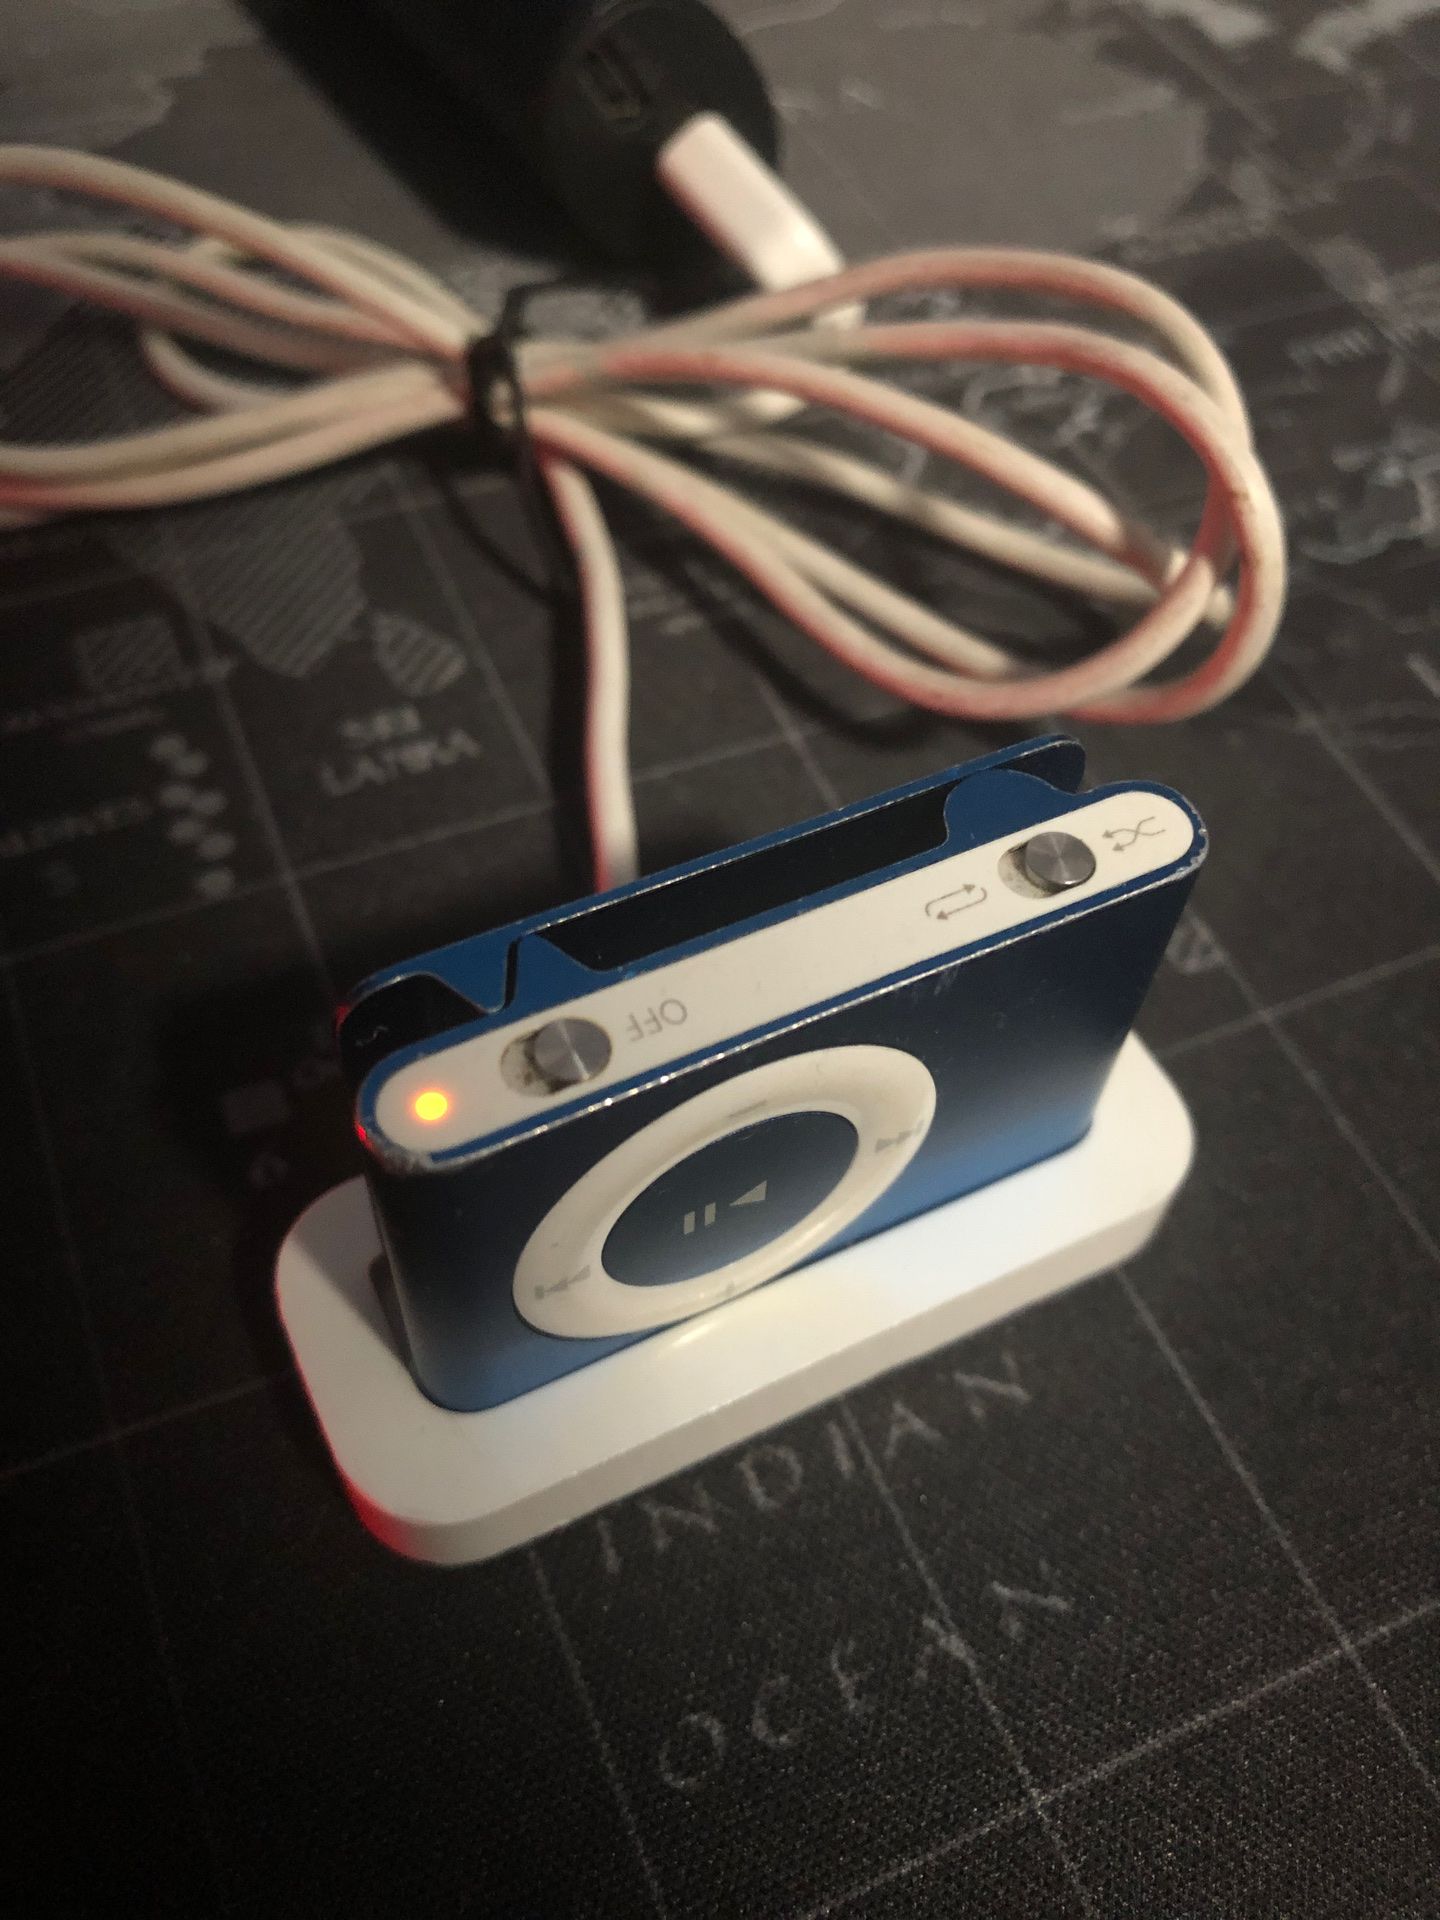 iPod Shuffle 2nd Gen (Great Condition)